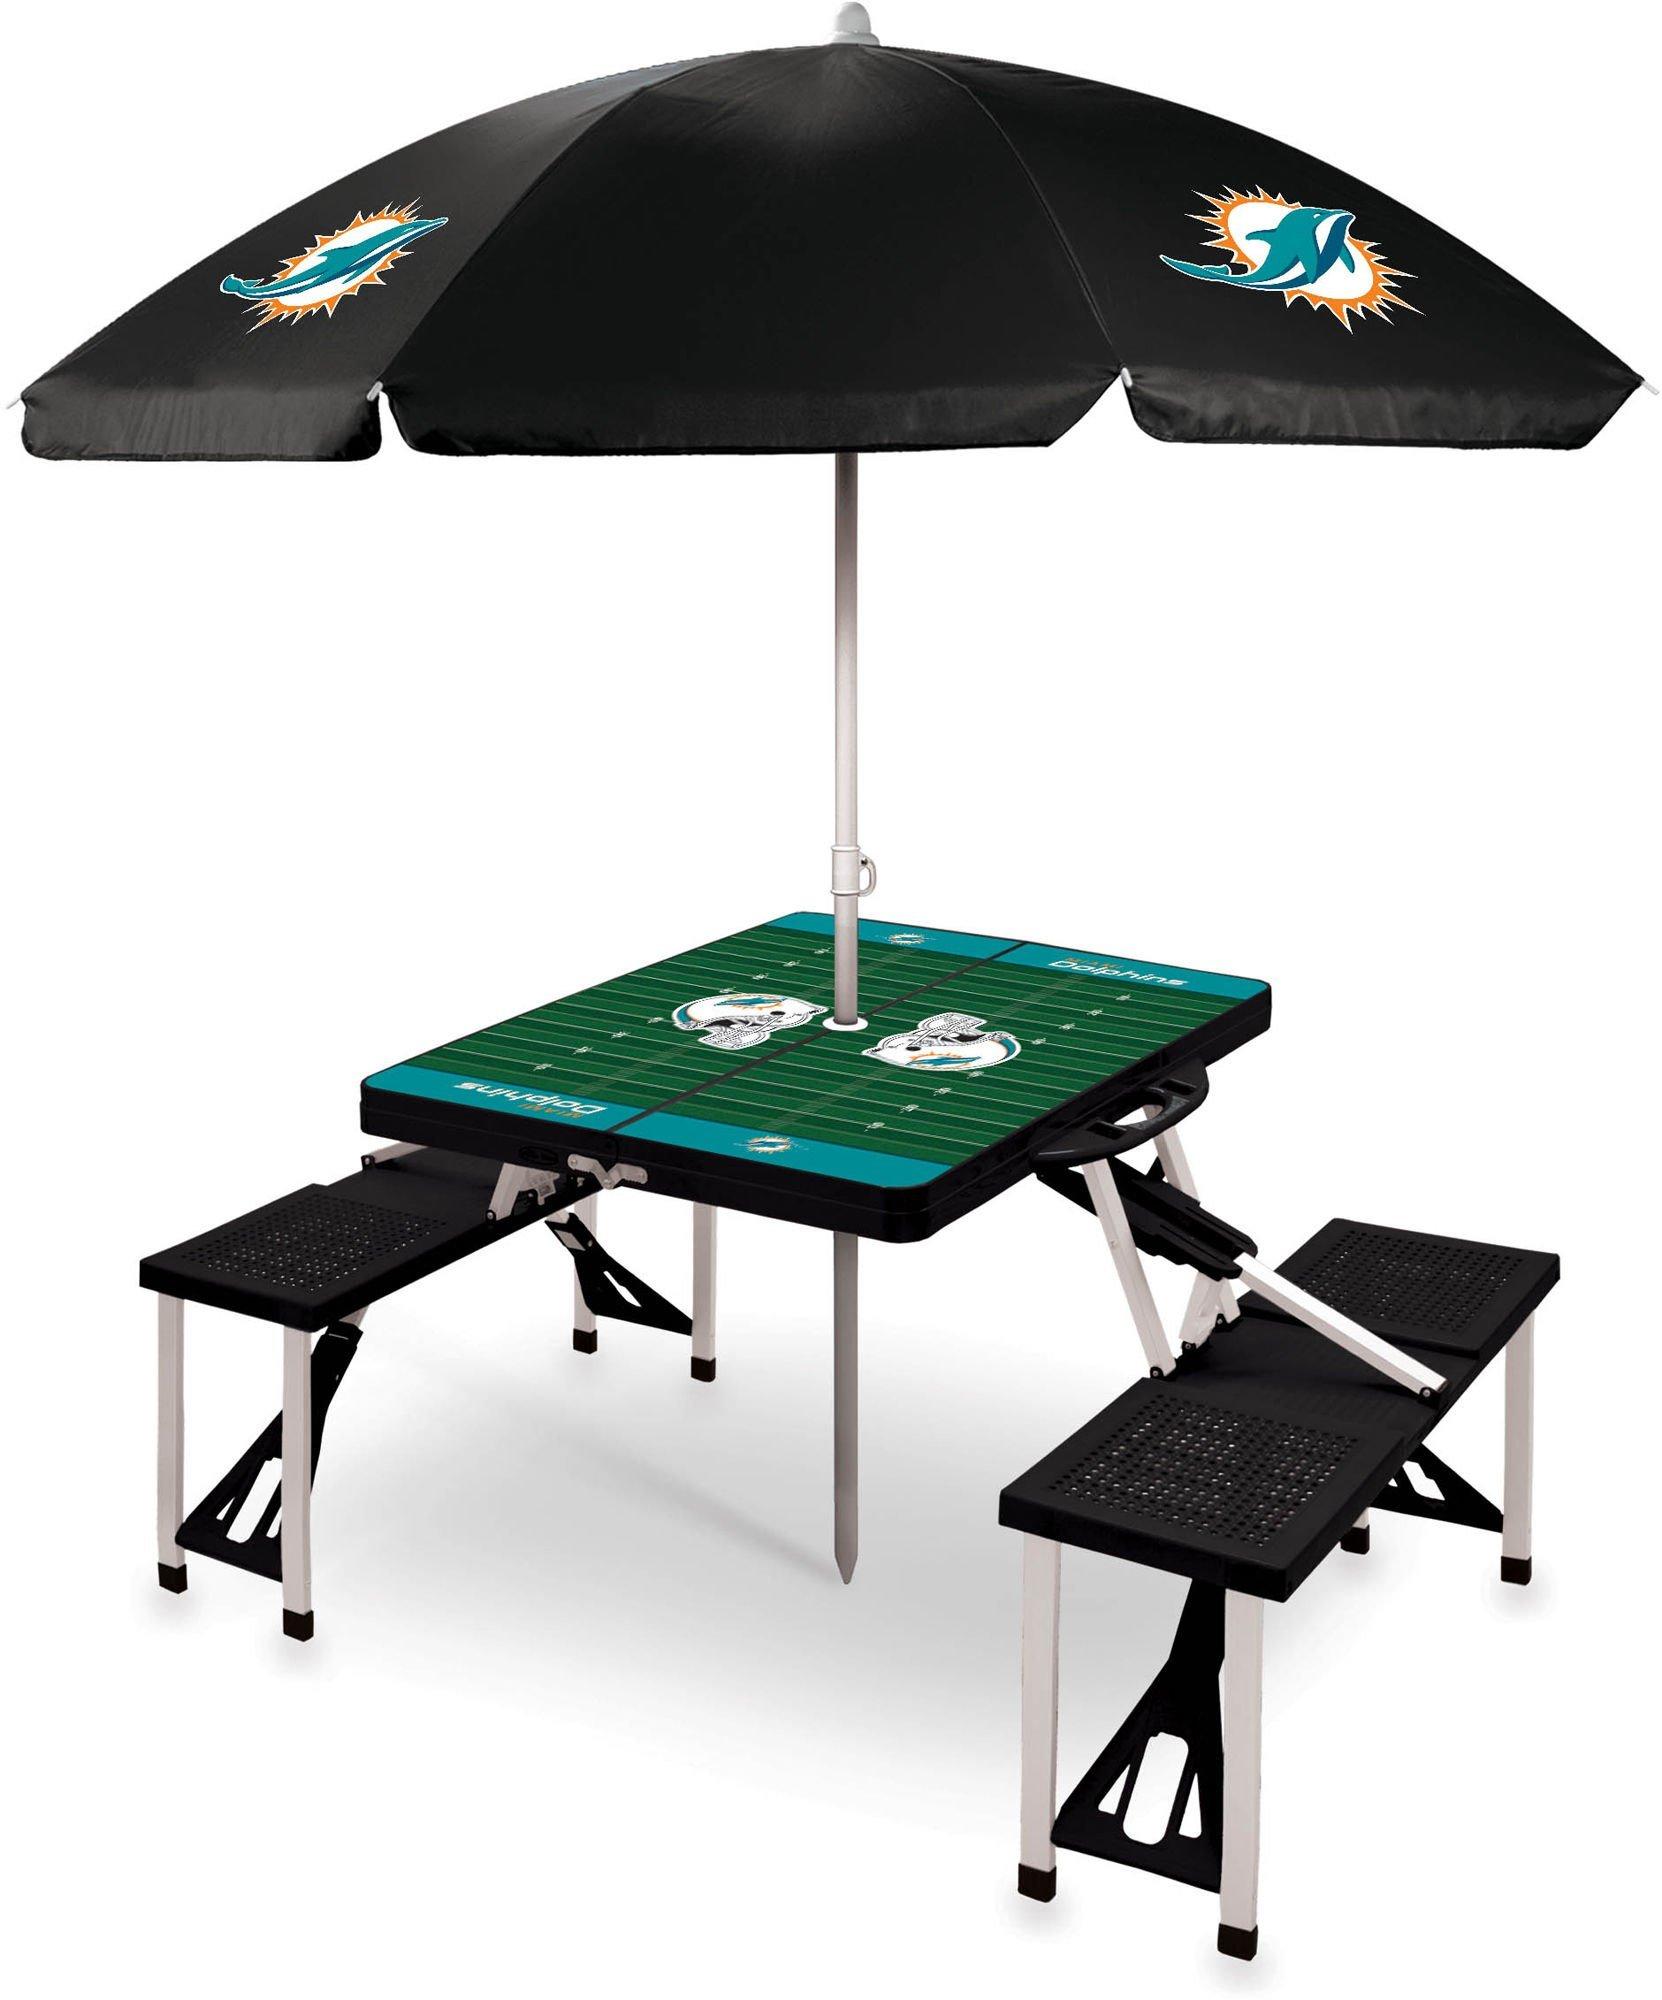 Miami Dolphins Picnic Table and Umbrella